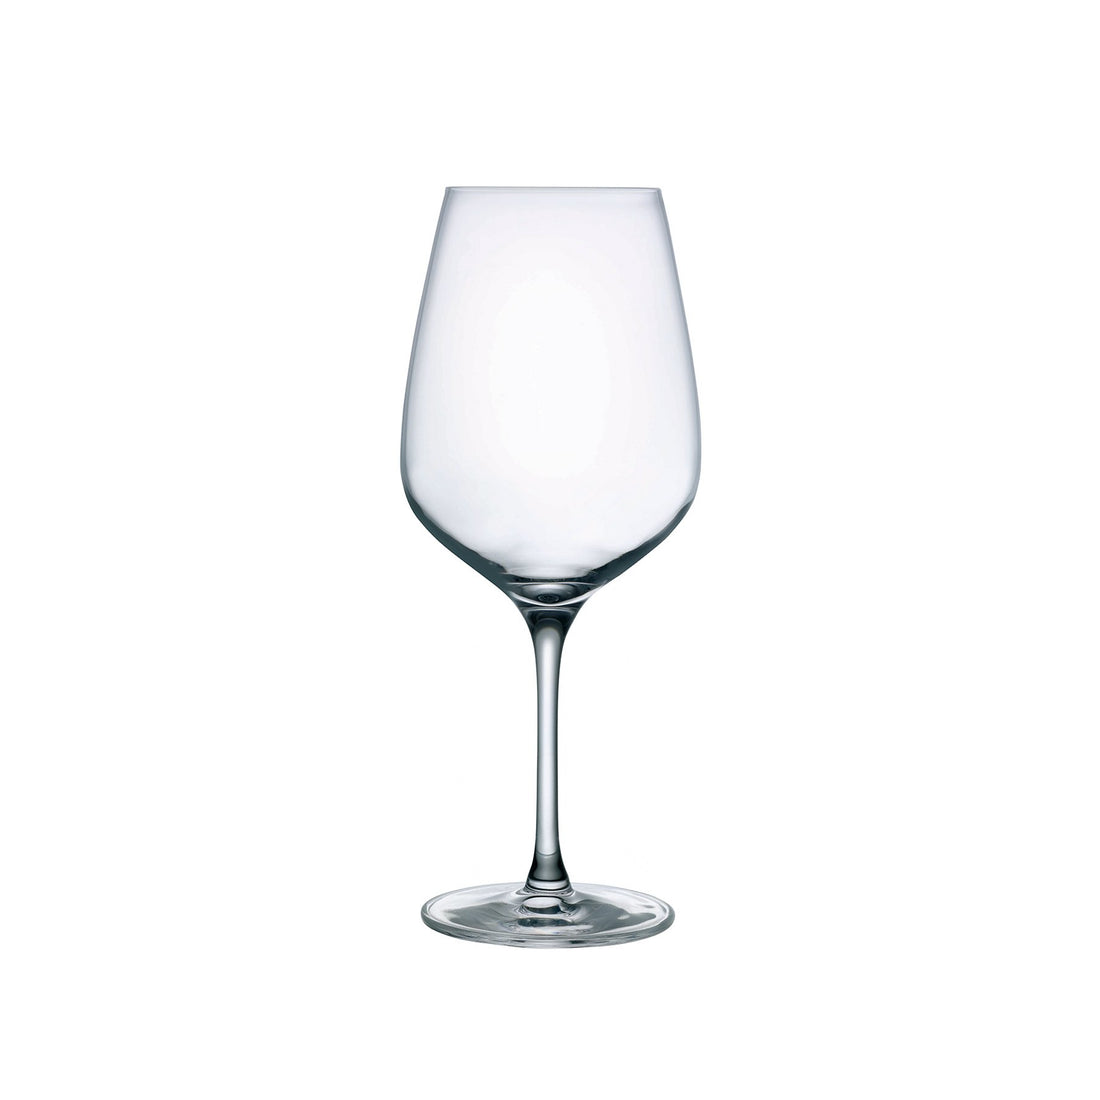 NUDE Refine wine glass in leadfree crystal